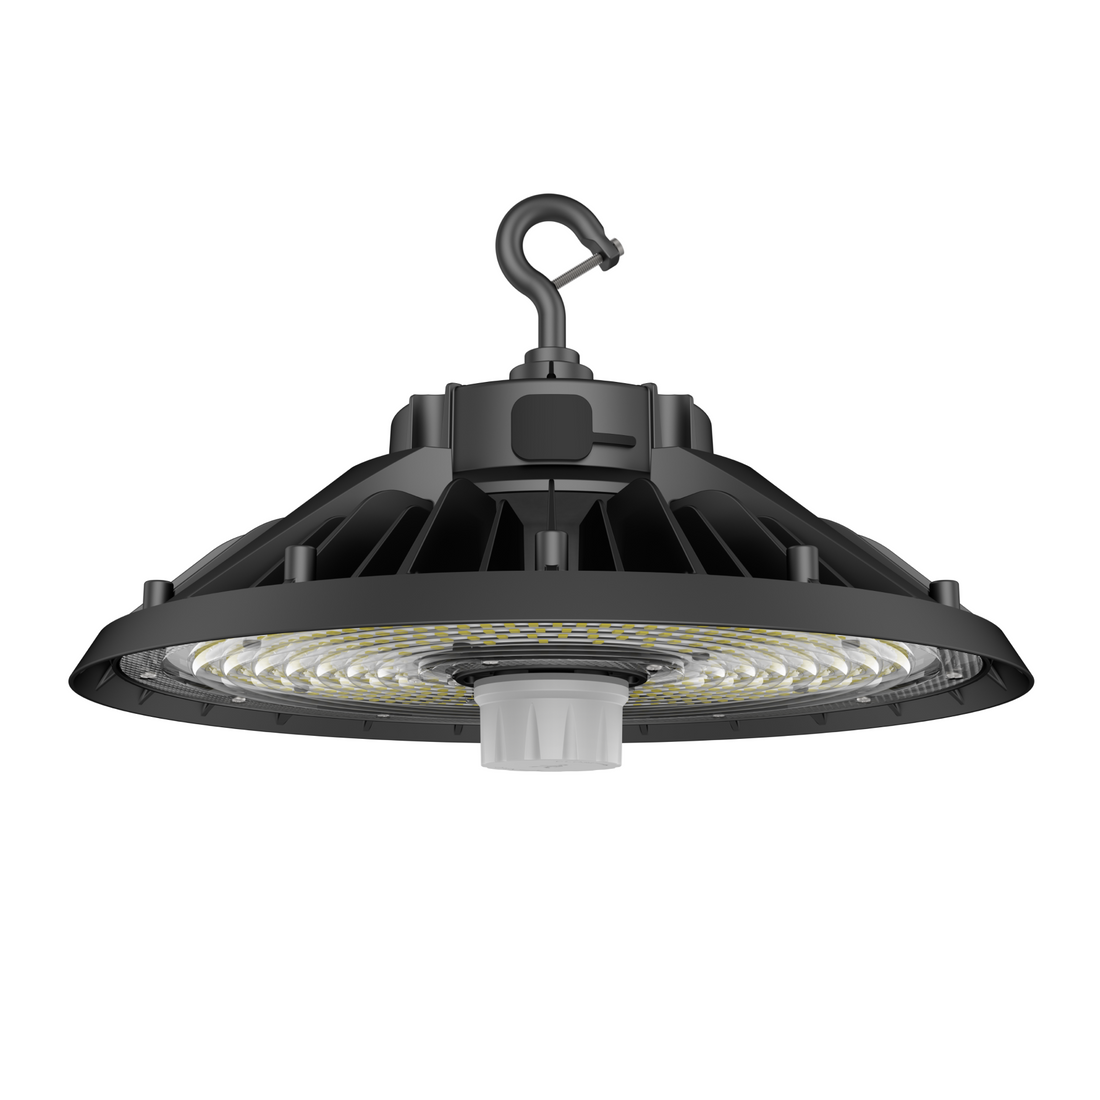 LED UFO High Bay Light 240W - 5000K - 36240Lumens 0-10V Dimmable - With sensor base, 277-480VAC DLC 5.1 Premium, Black